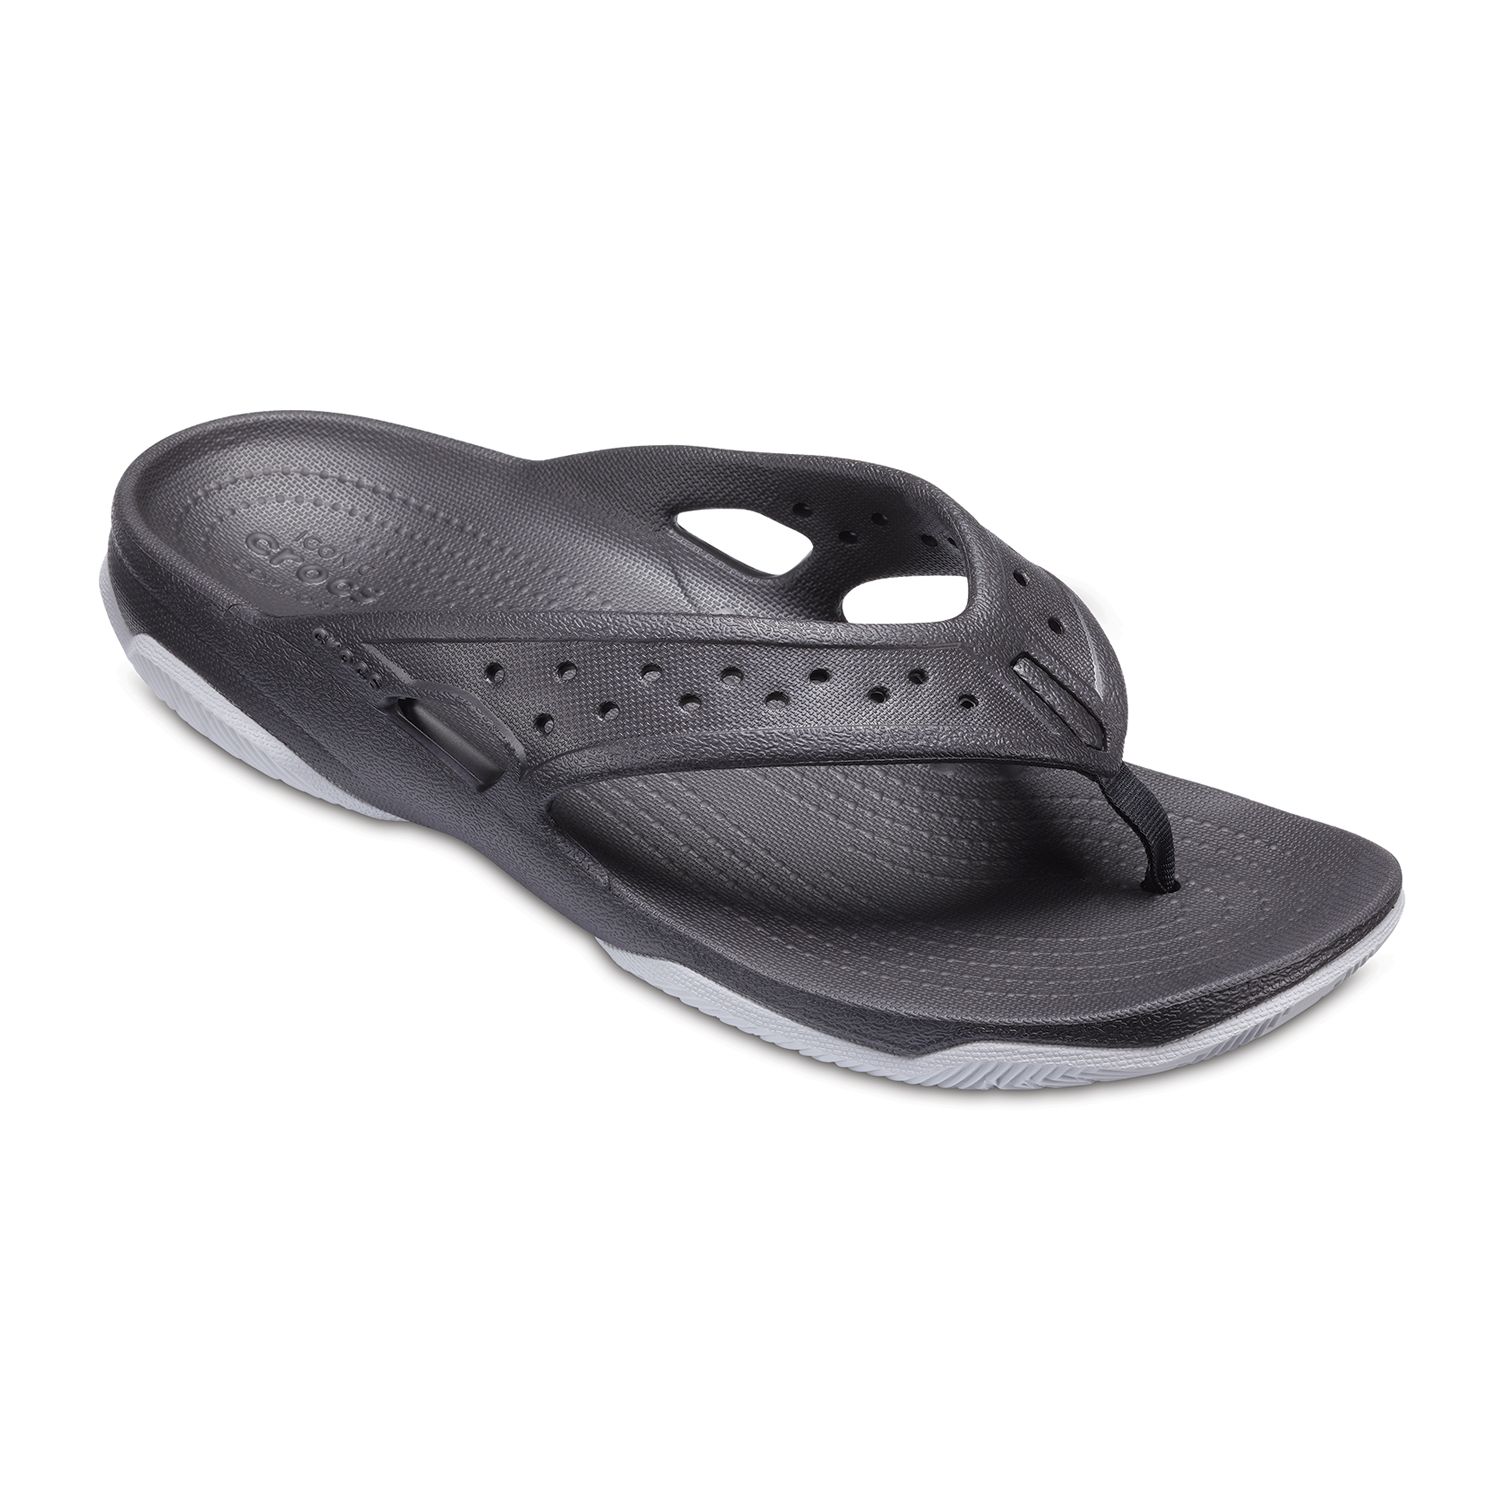 crocs men's swiftwater sandal